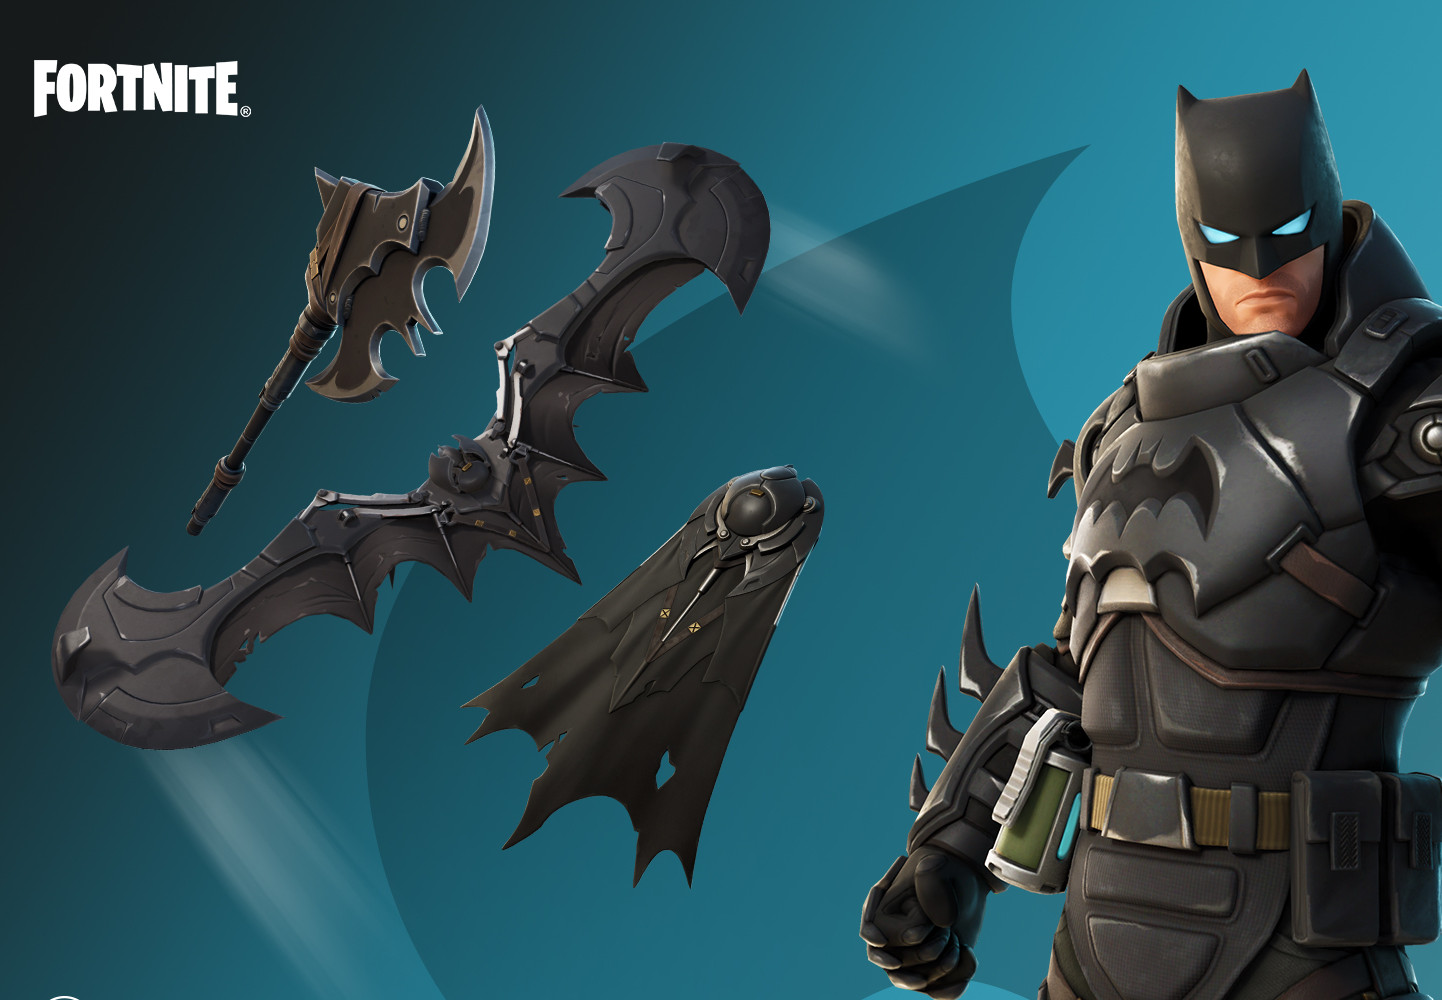 Fortnite - Armored Batman Zero Skin Collection DLC Epic Games CD Key